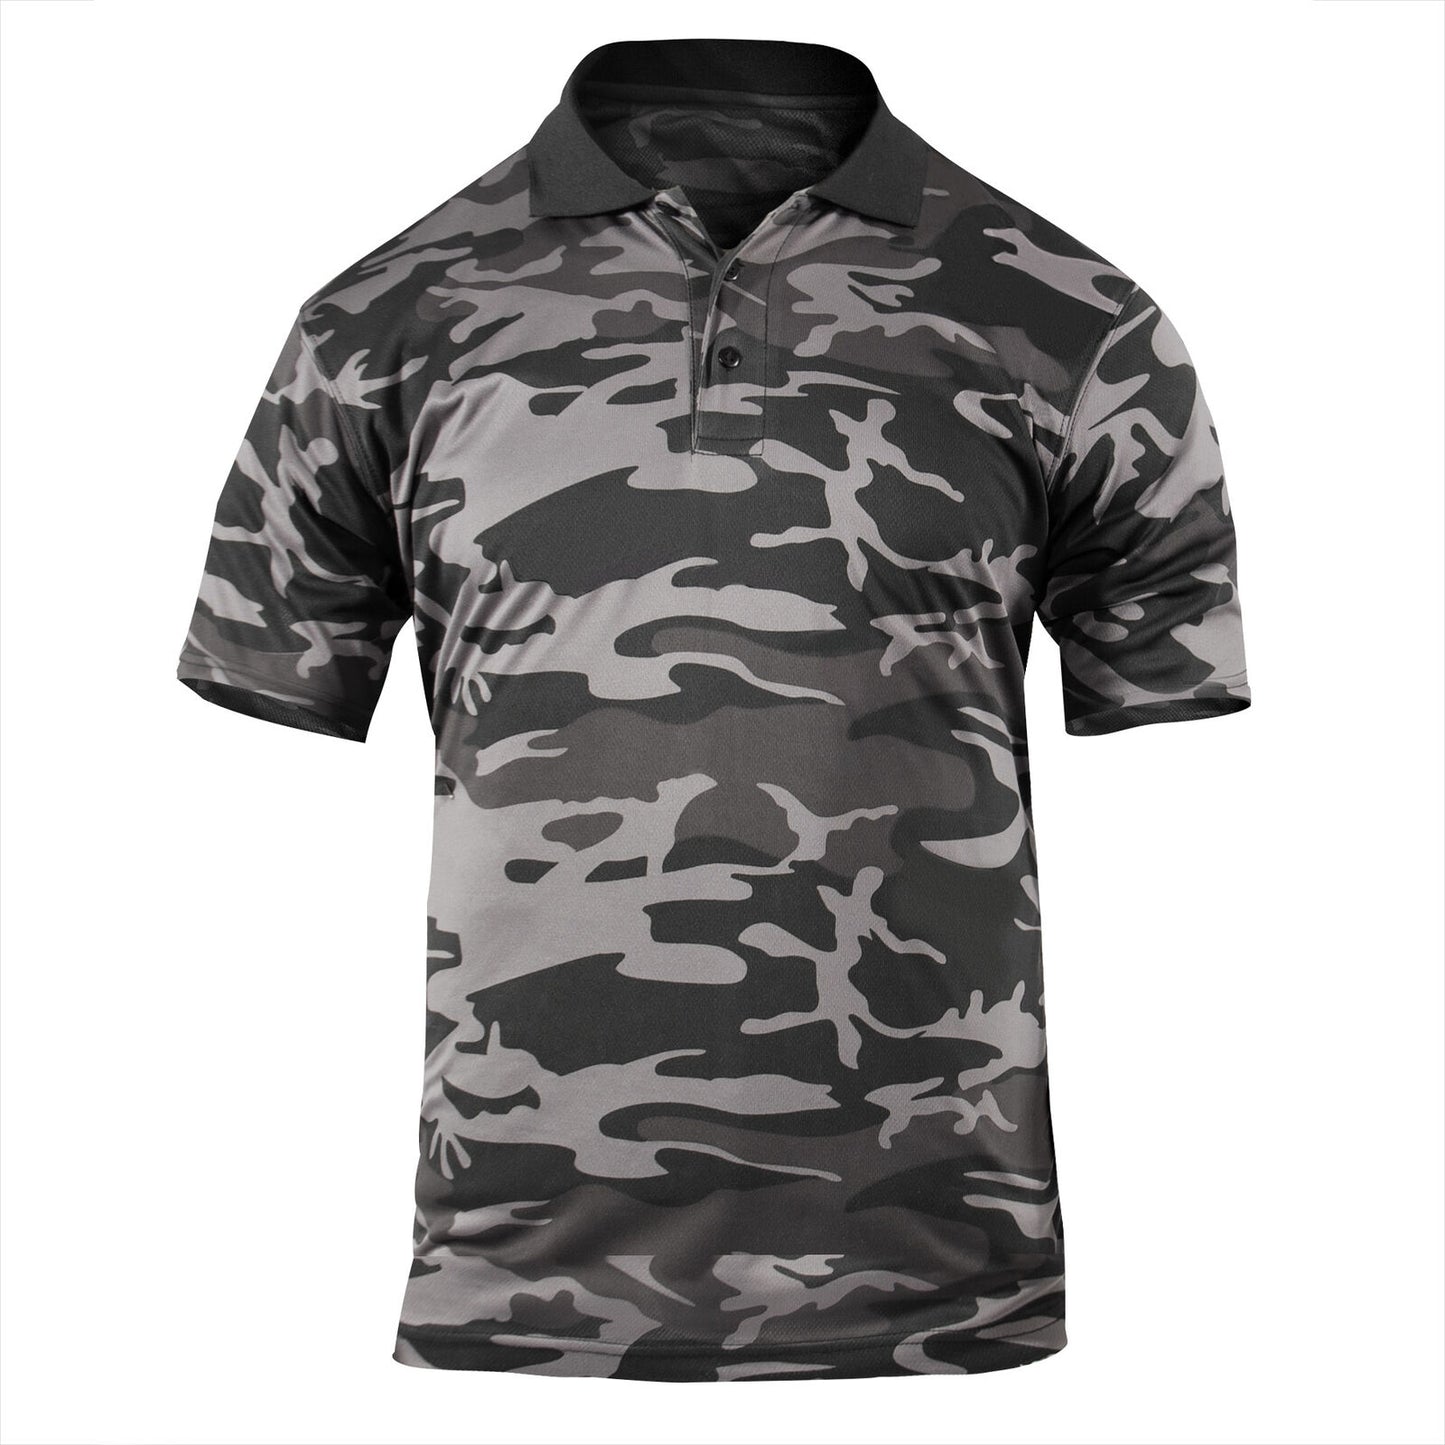 Men's Black Camo Moisture Wicking Polo Short Sleeve Polyester Shirt